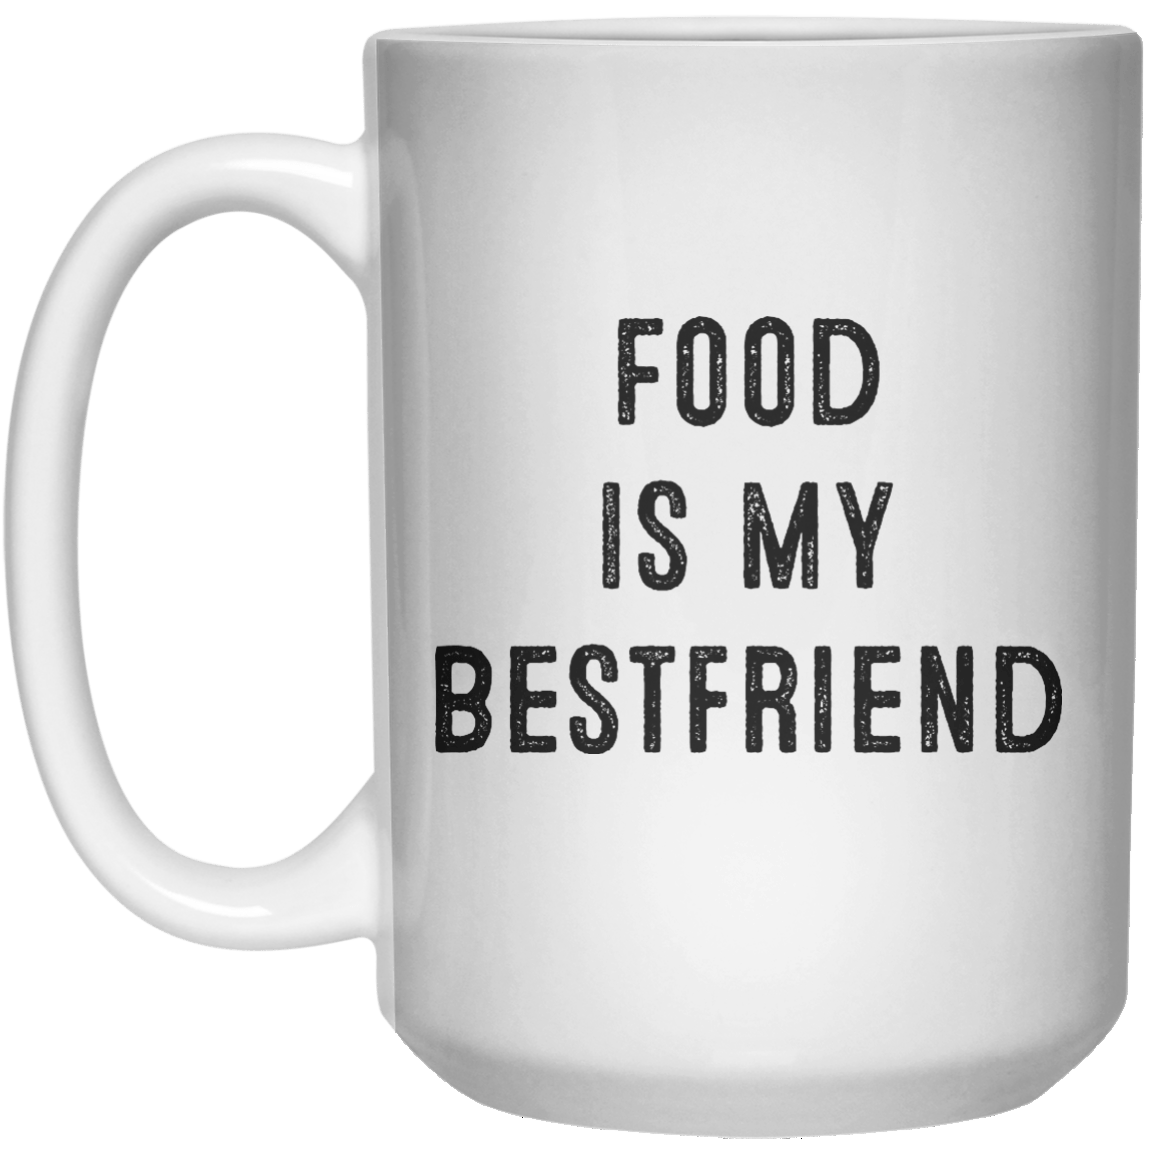 Food Is My Bestfriend MUG  Mug - 15oz - Shirtoopia